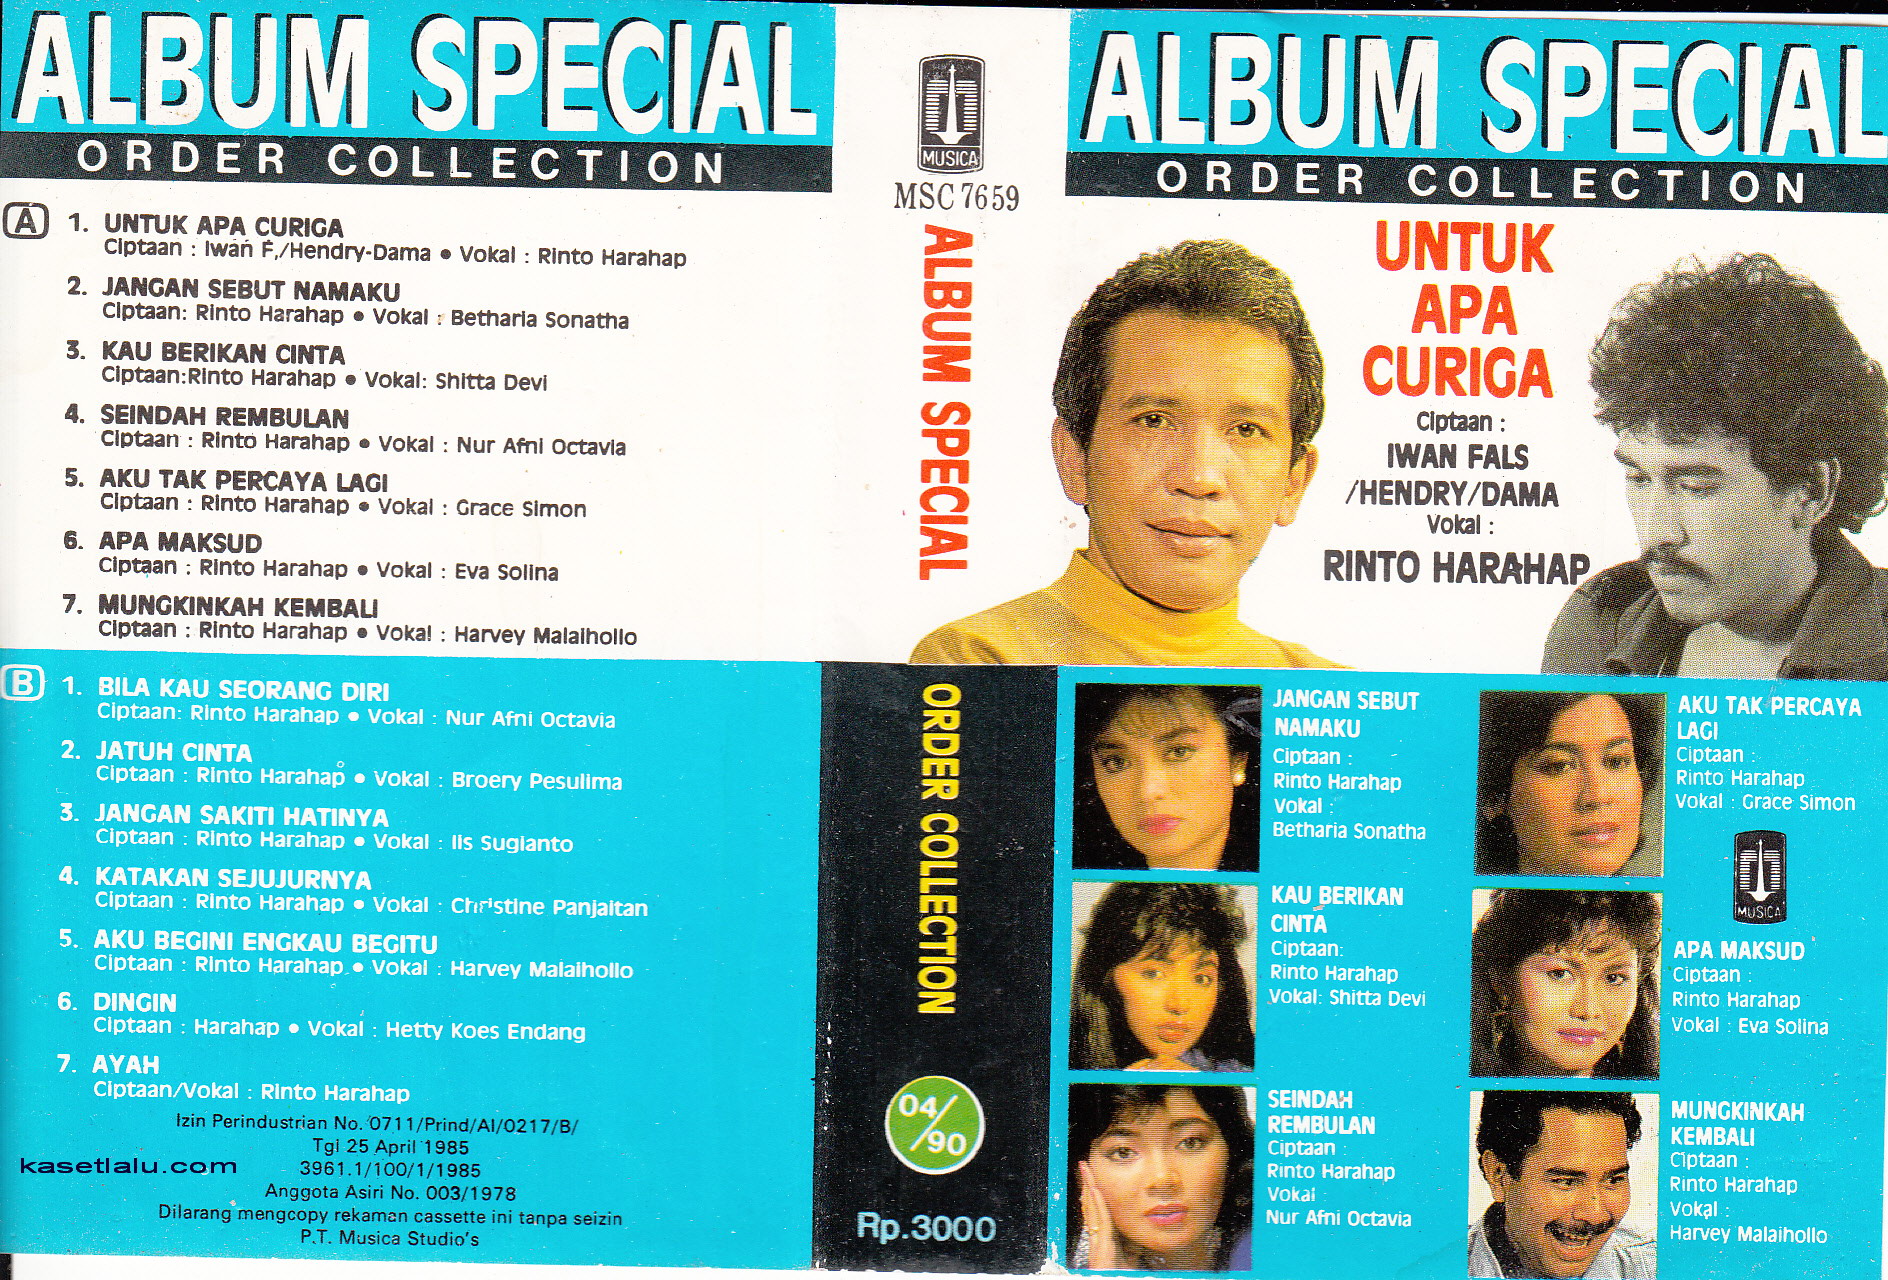 Album Special Order Collection